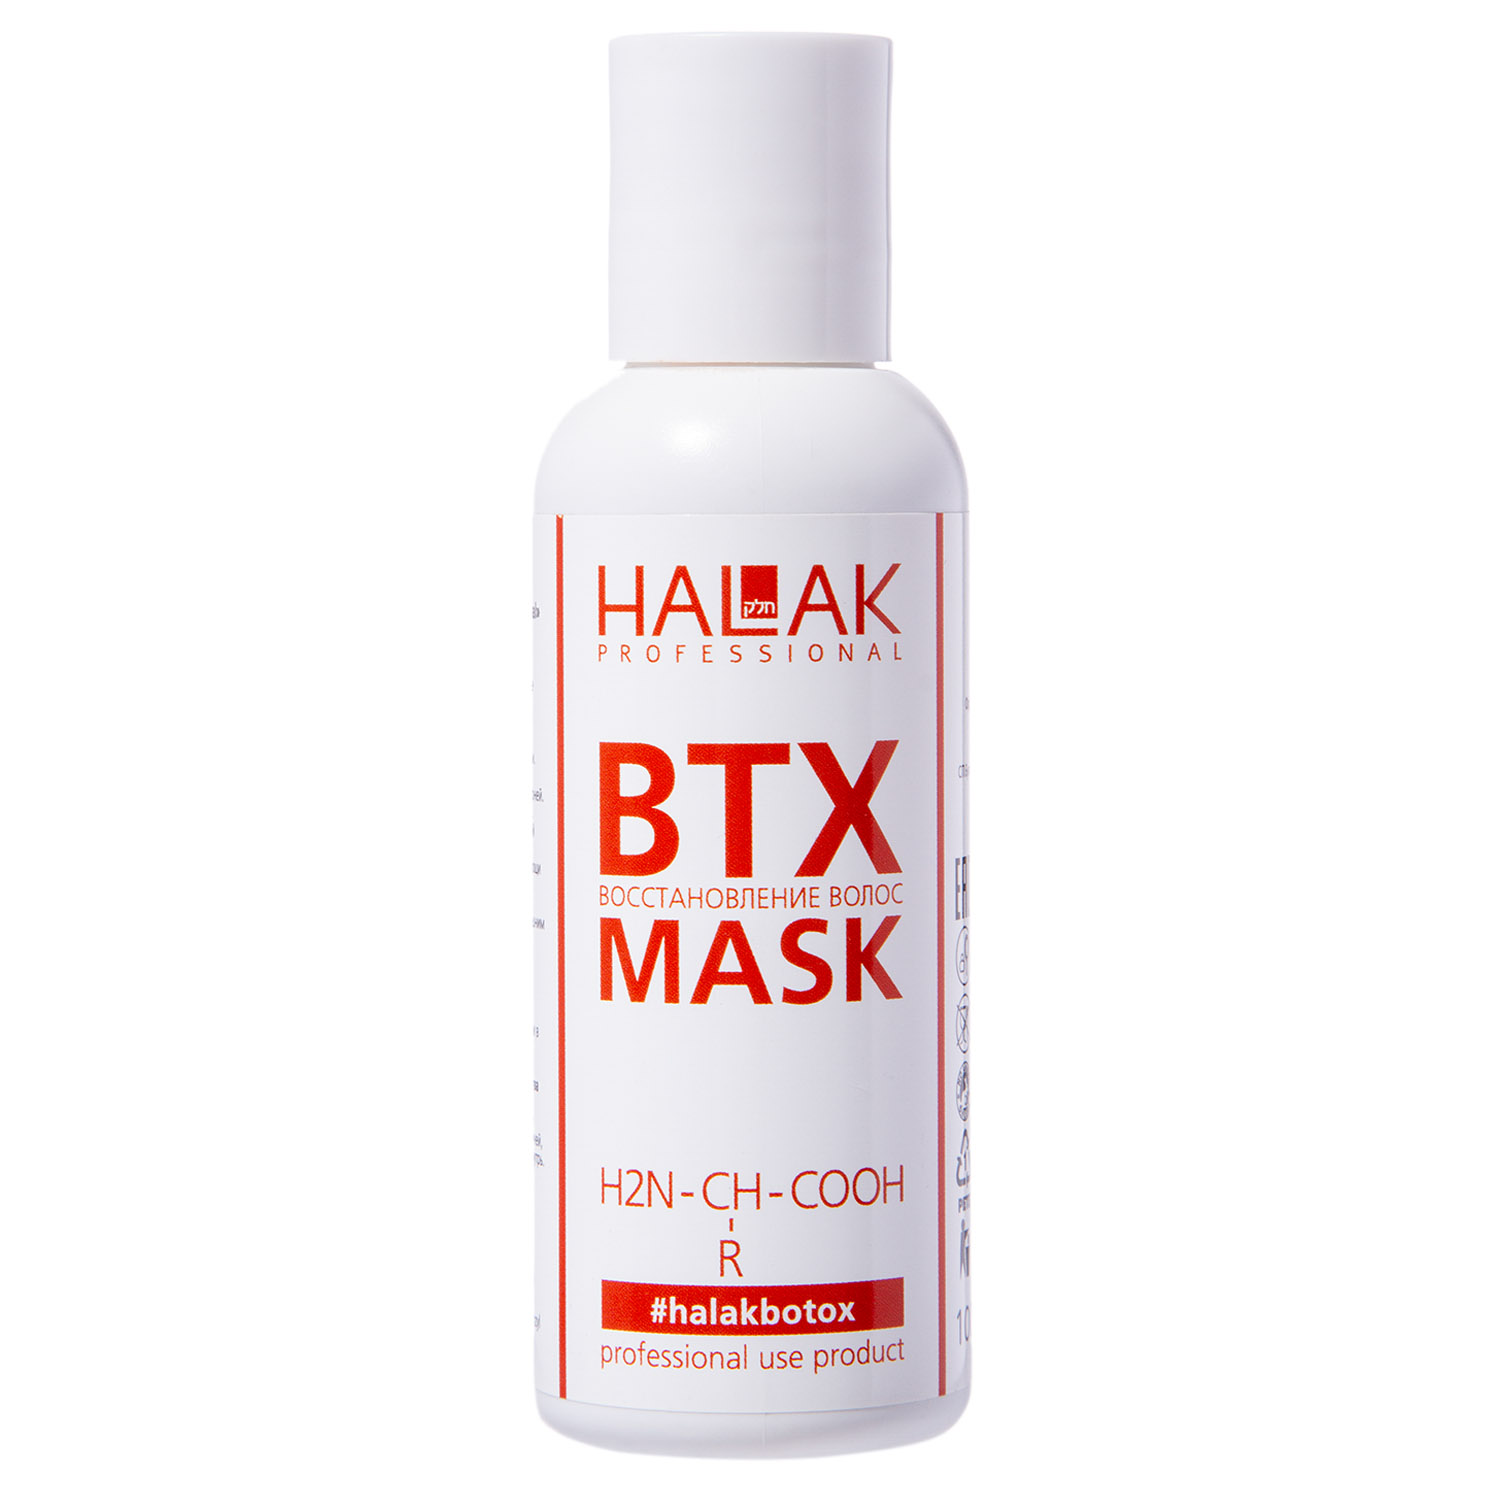 Halak Professional Маска для восстановления волос Hair Treatment, 100 мл (Halak Professional, BTX) halak professional маска для восстановления волос hair treatment 100 мл halak professional btx